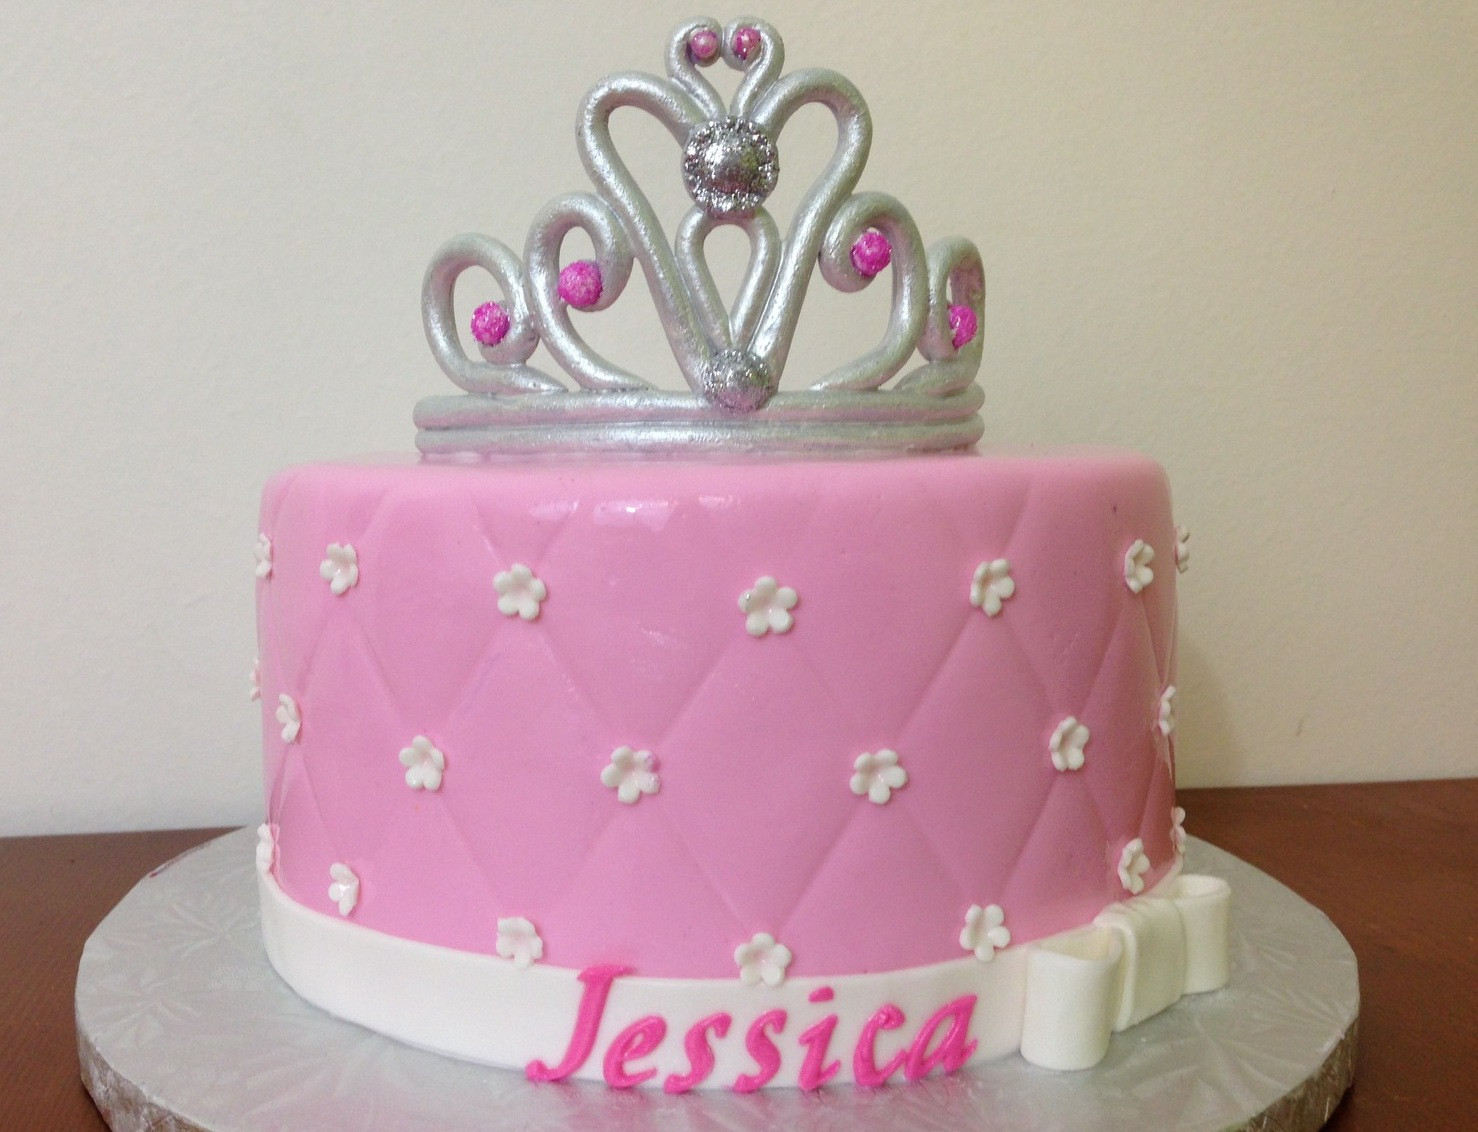 Best ideas about Happy Birthday Jessica Cake
. Save or Pin Happy Birthday Jessica Now.